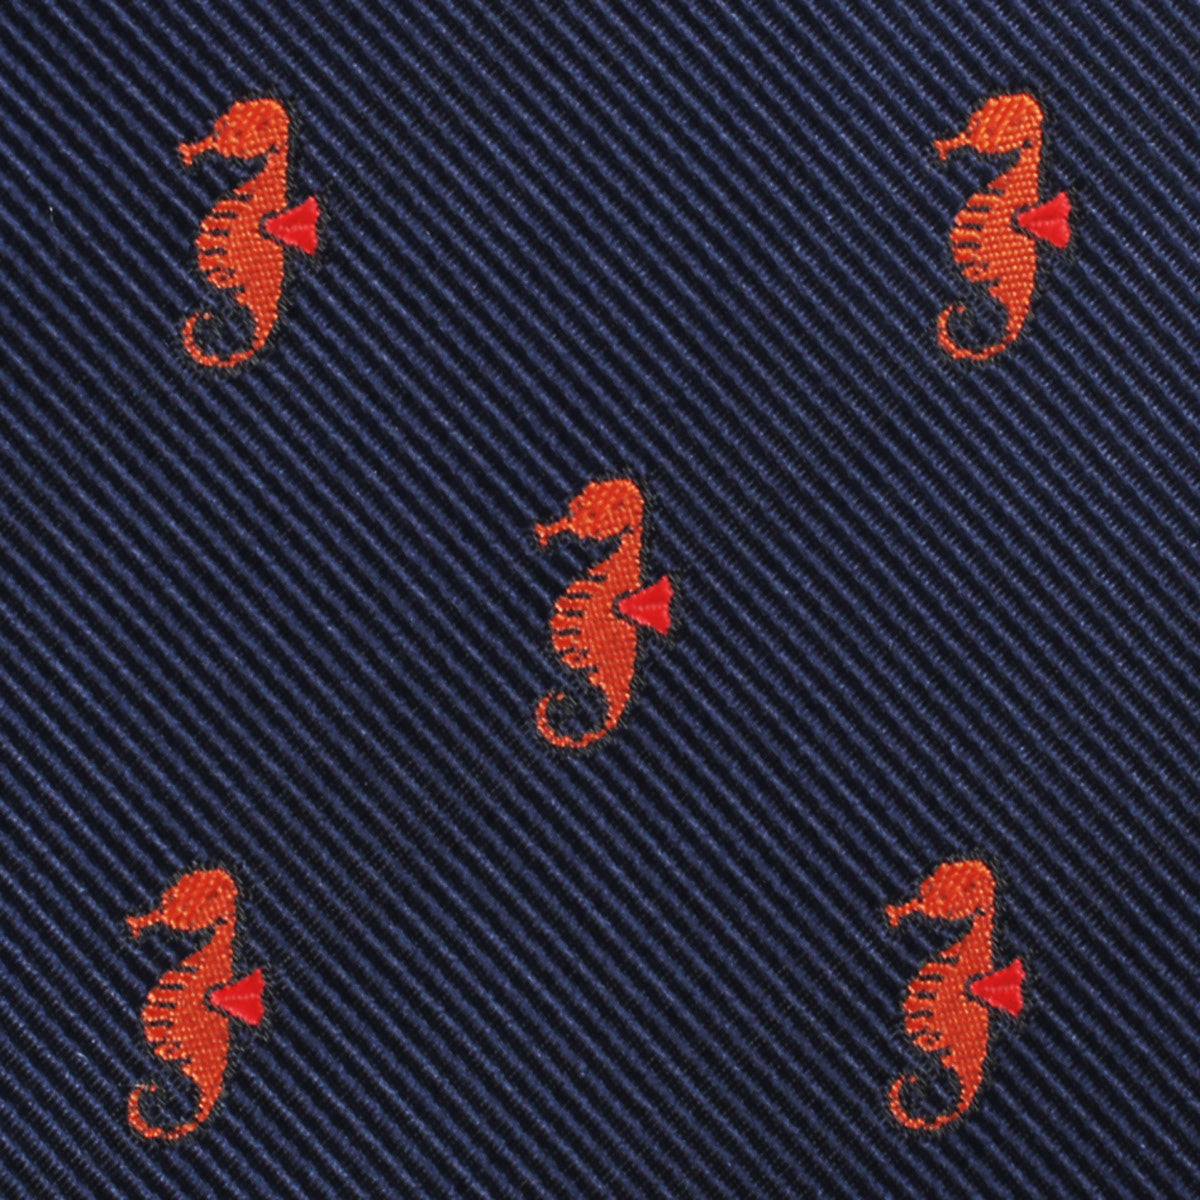 Tropical Seahorse Skinny Tie Fabric